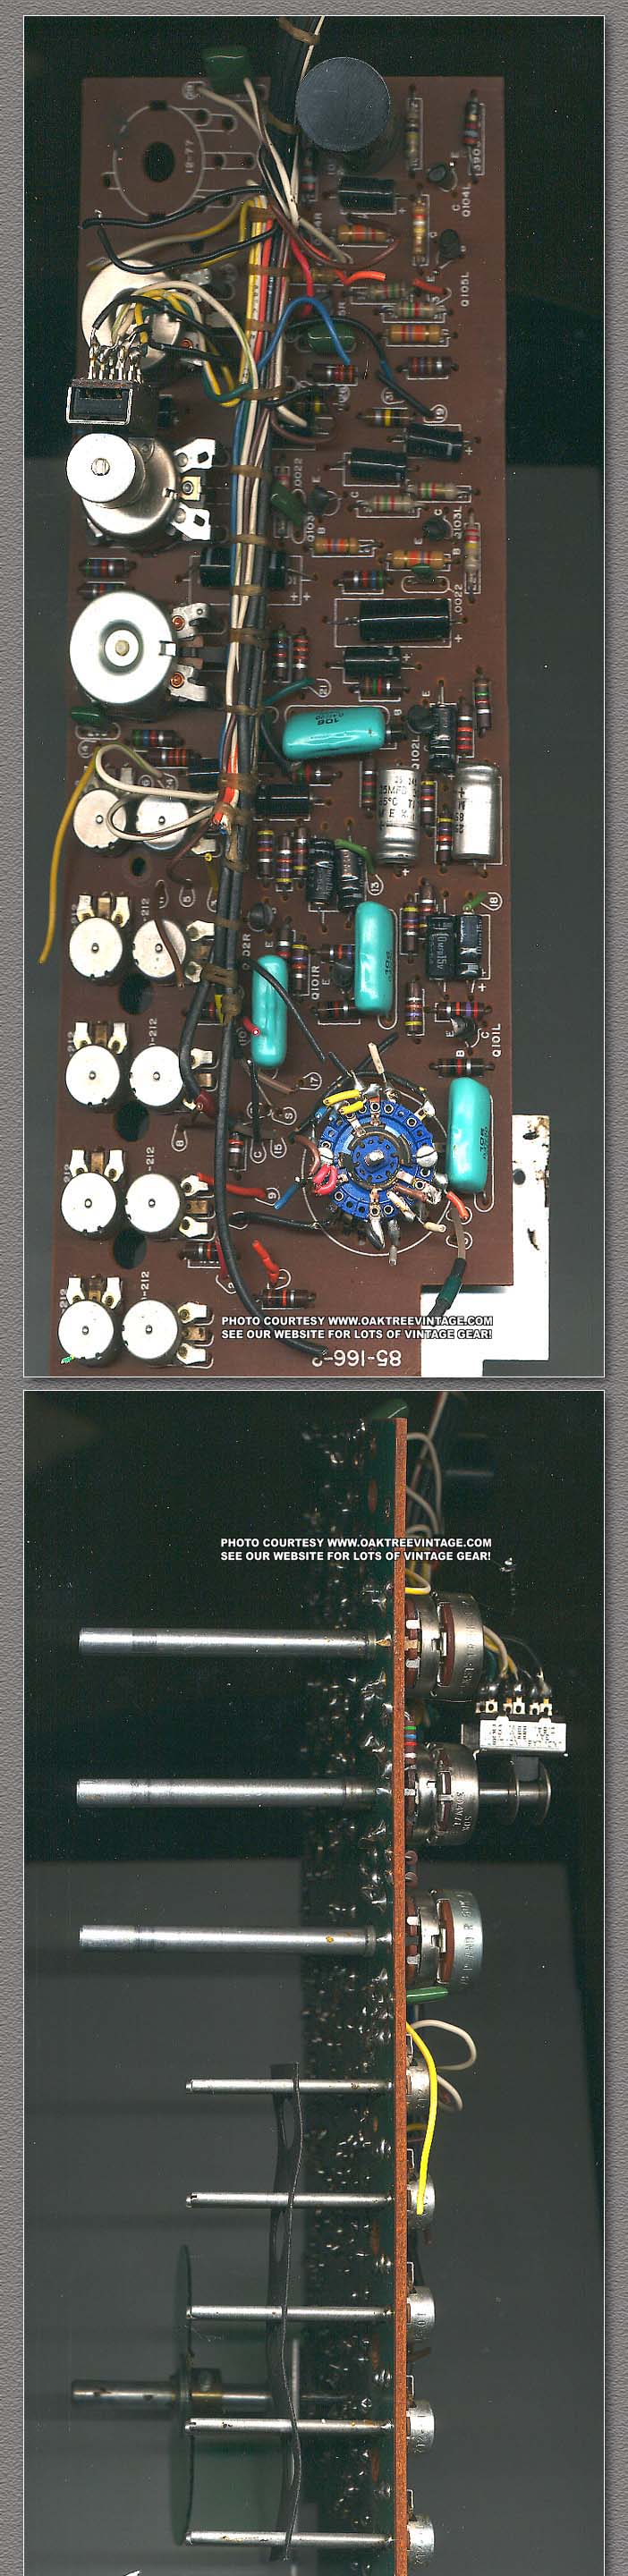 heathkit_ar-15_85-166-3_control_circuit_board